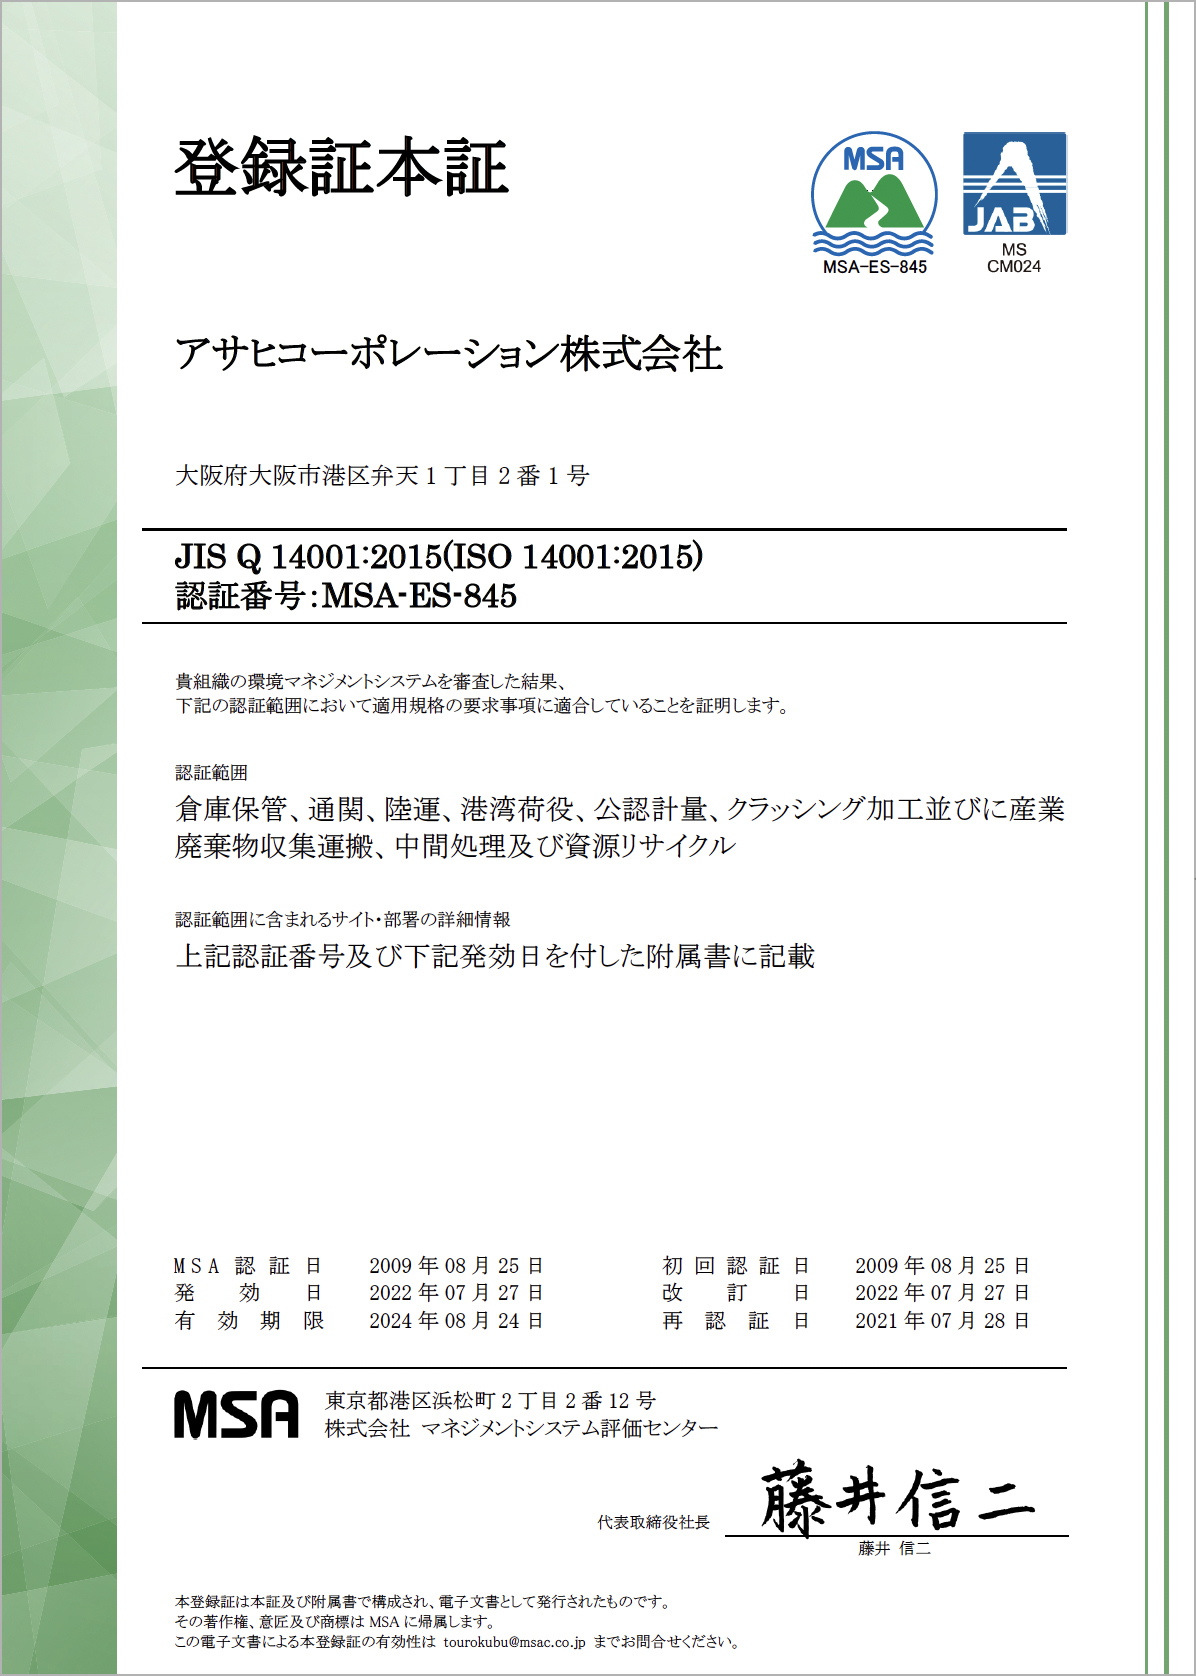 ISO14001環境方針